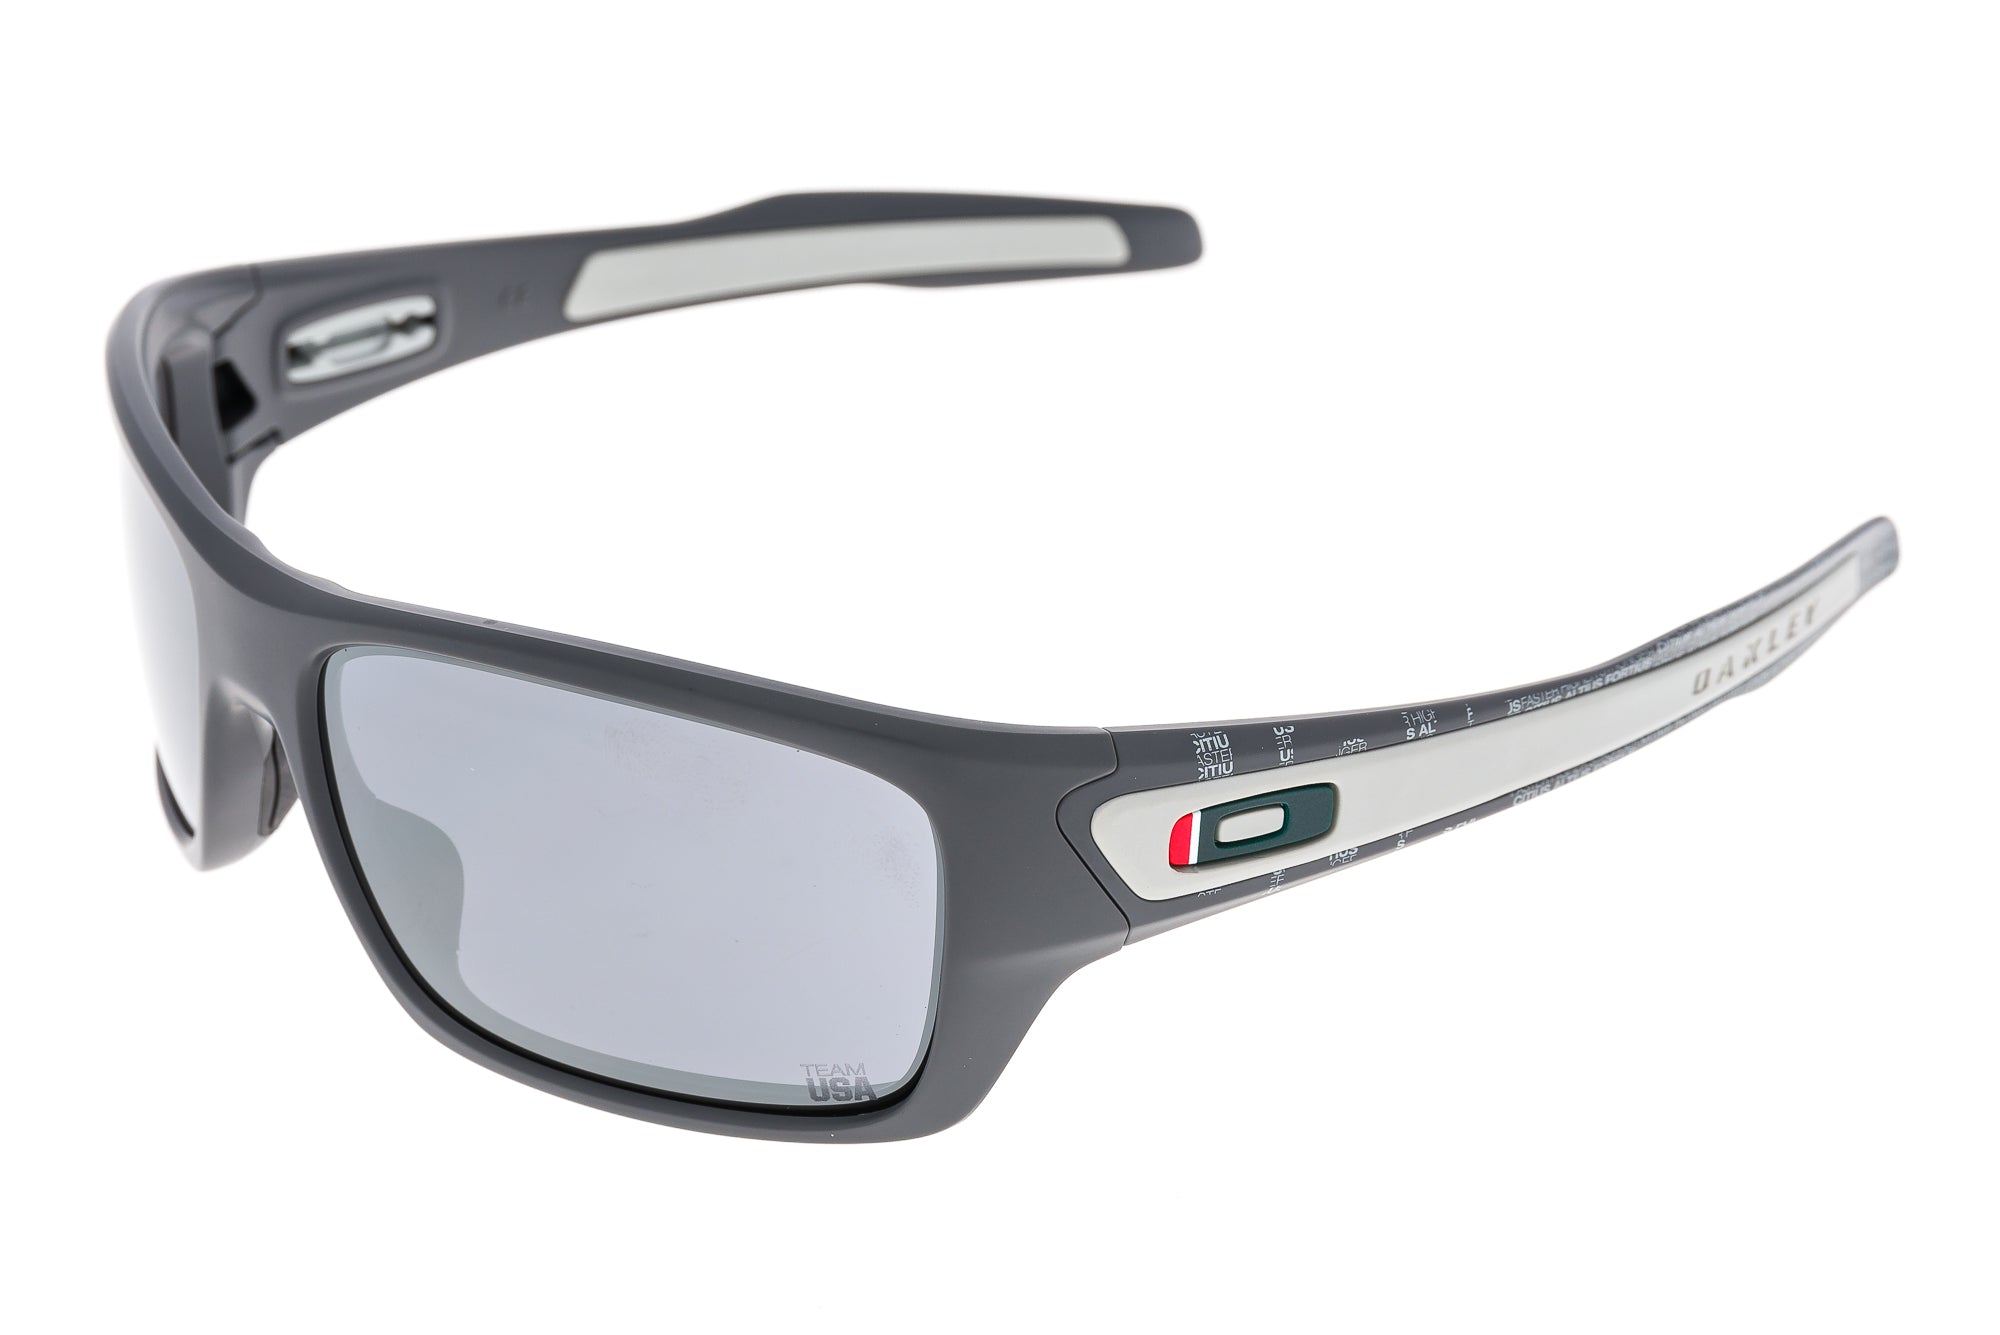 Oakley Turbine Team USA Sunglasses Gray Frame Gray Lens drive side